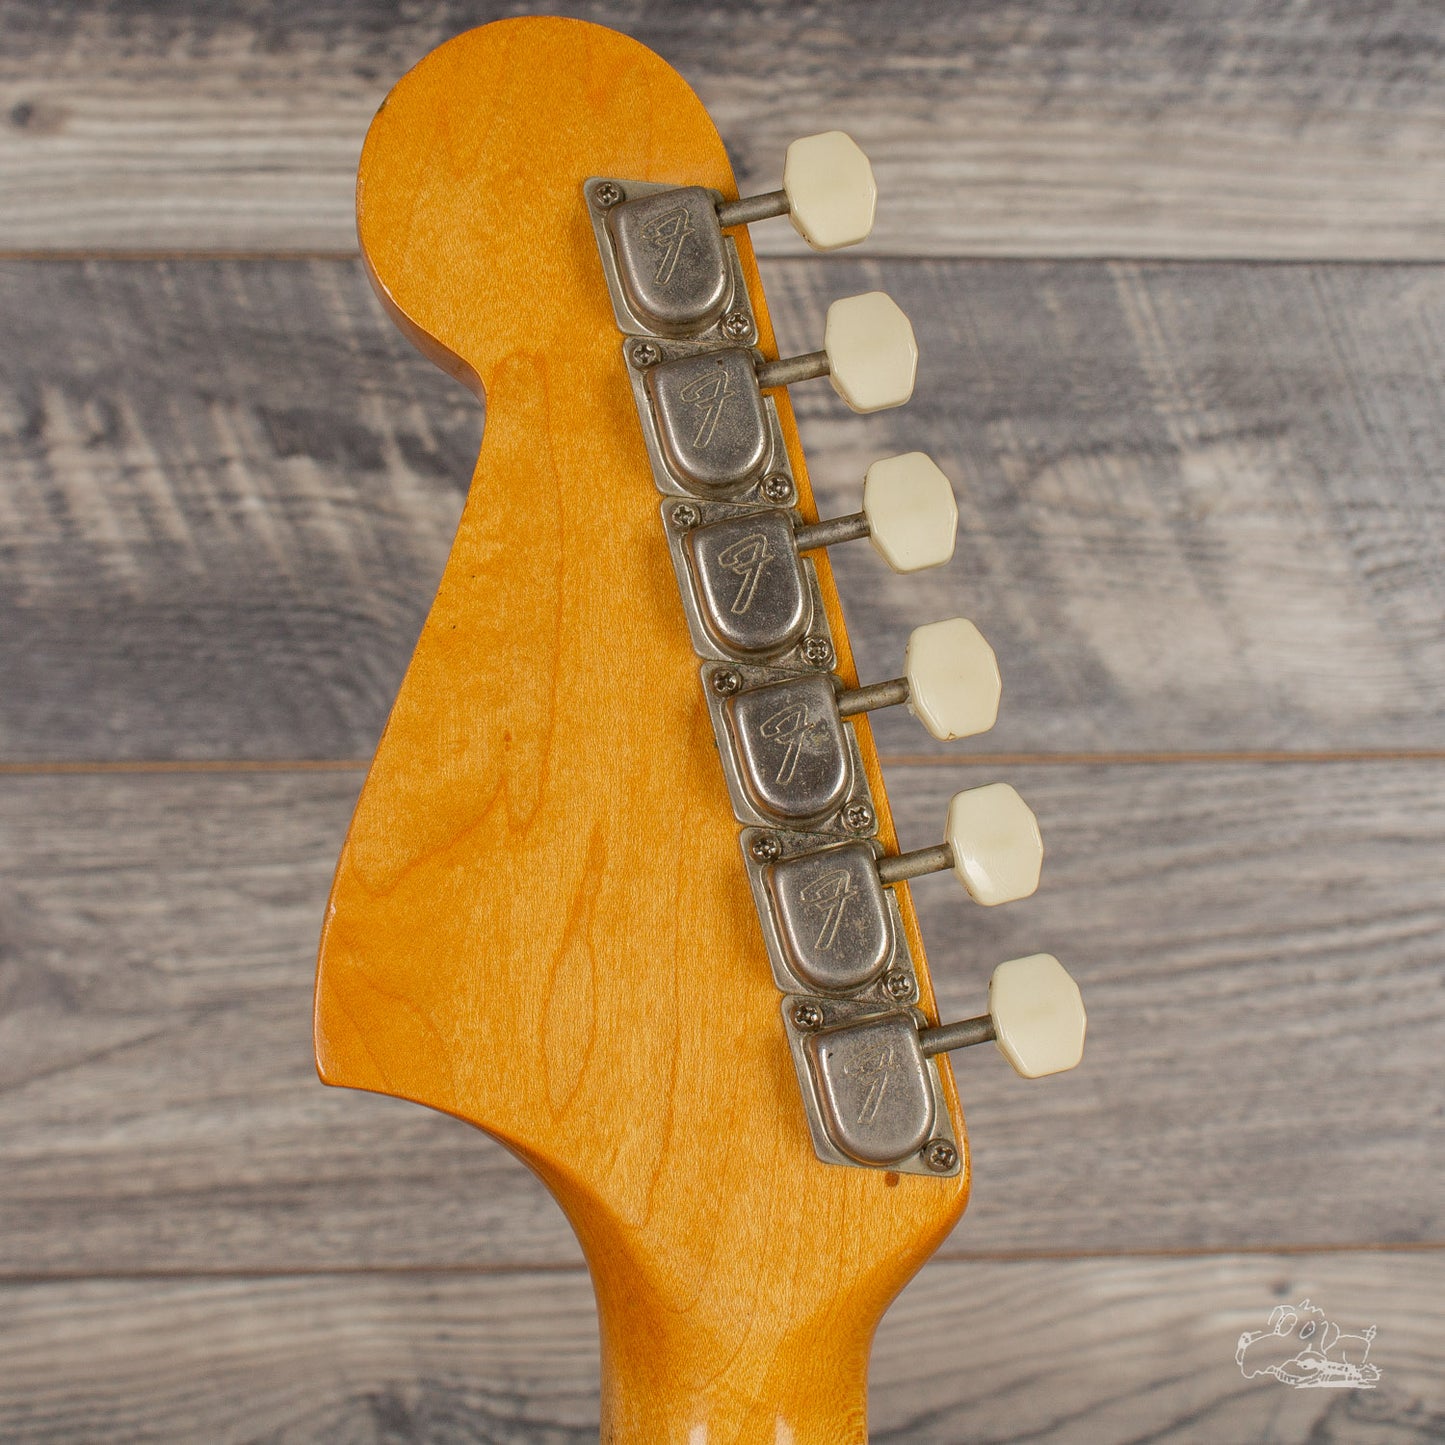 1965 Fender Mustang - Daphne Blue